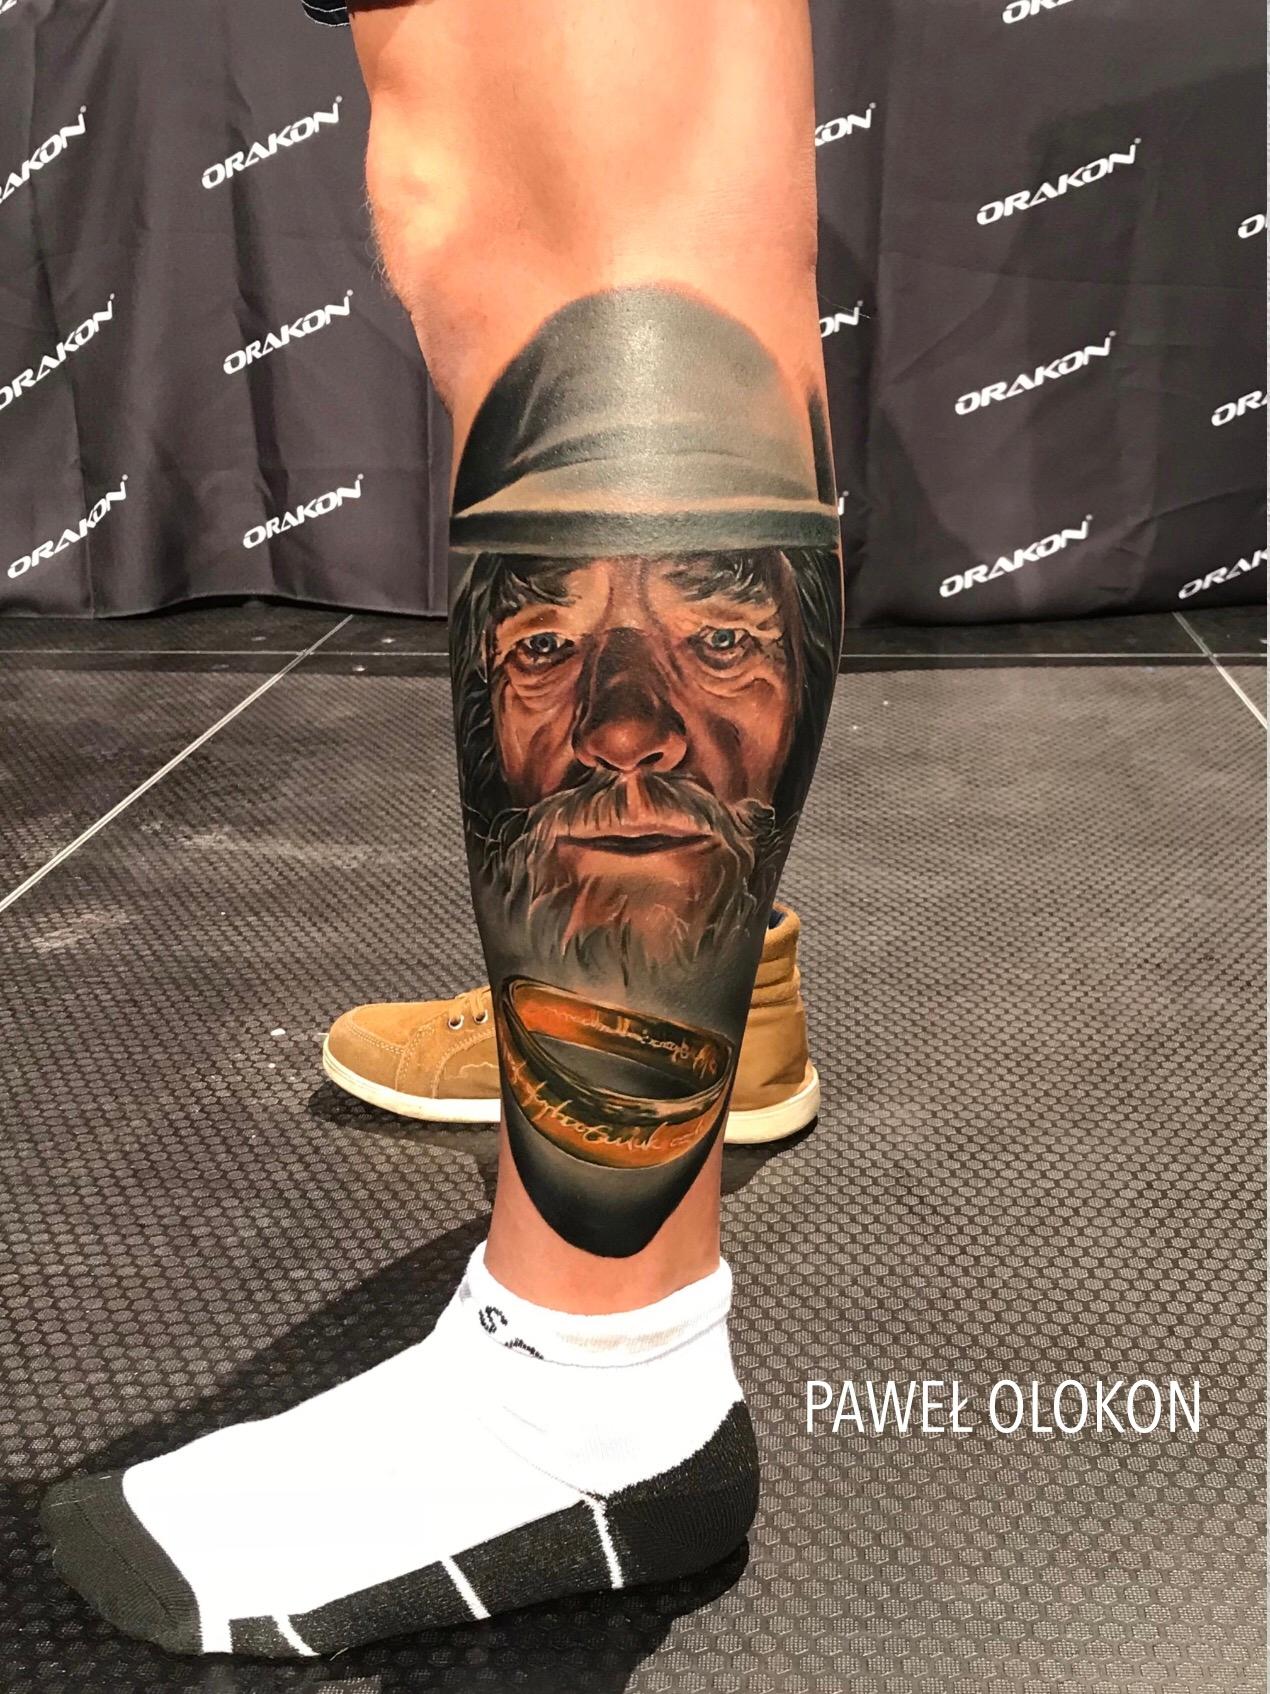 Inksearch tattoo Pawel Olokon